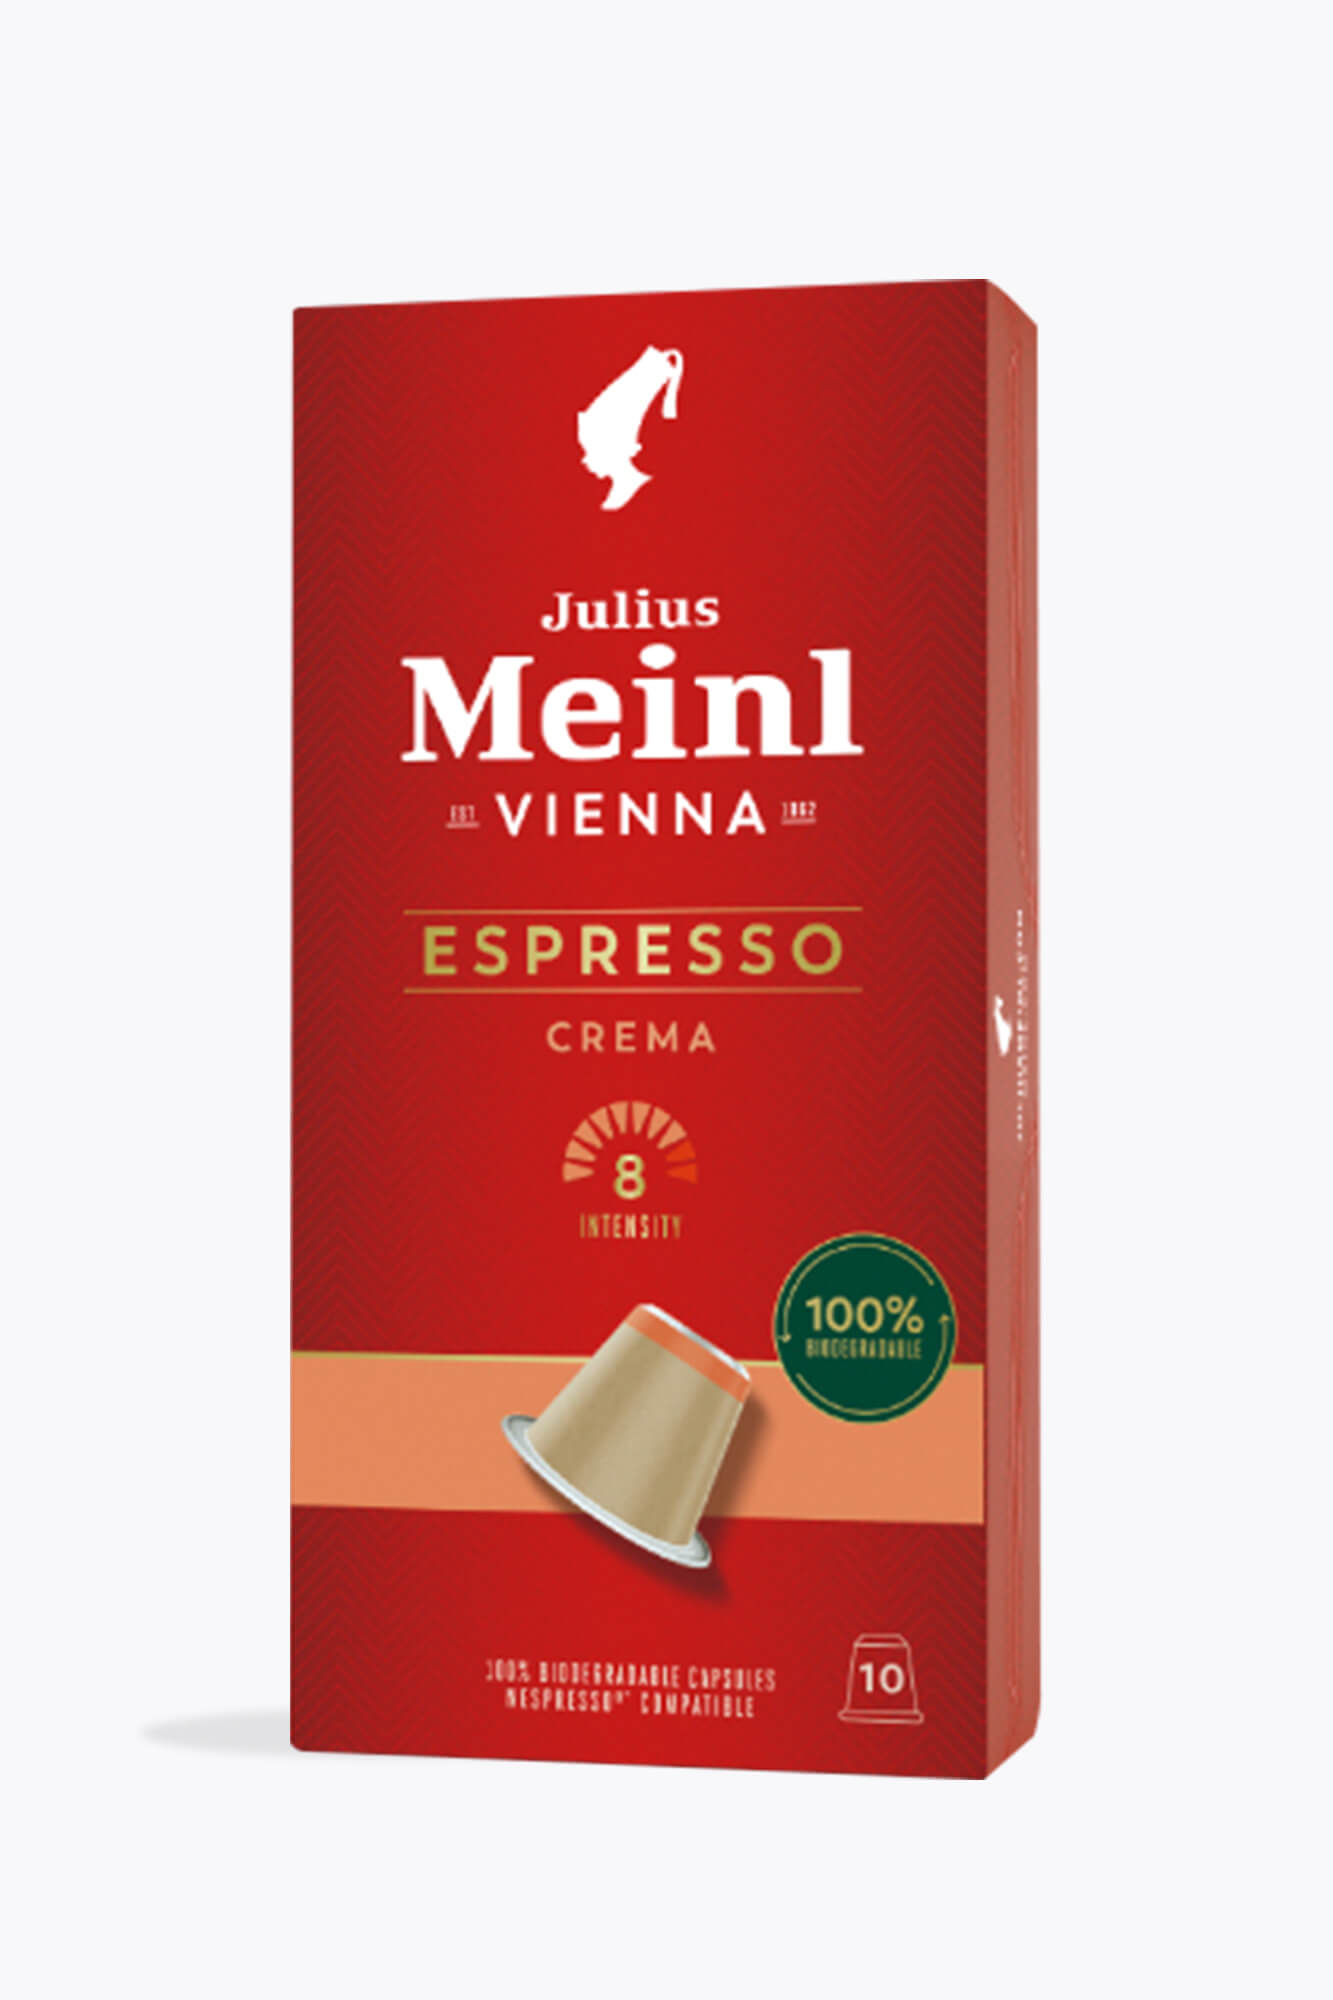 Кофе Julius Meinl crema. Кофе Julius Meinl зеленый. Julius Meinl Espresso Bar кофе. Кофе молотый Julius Meinl Espresso. Julius meinl espresso